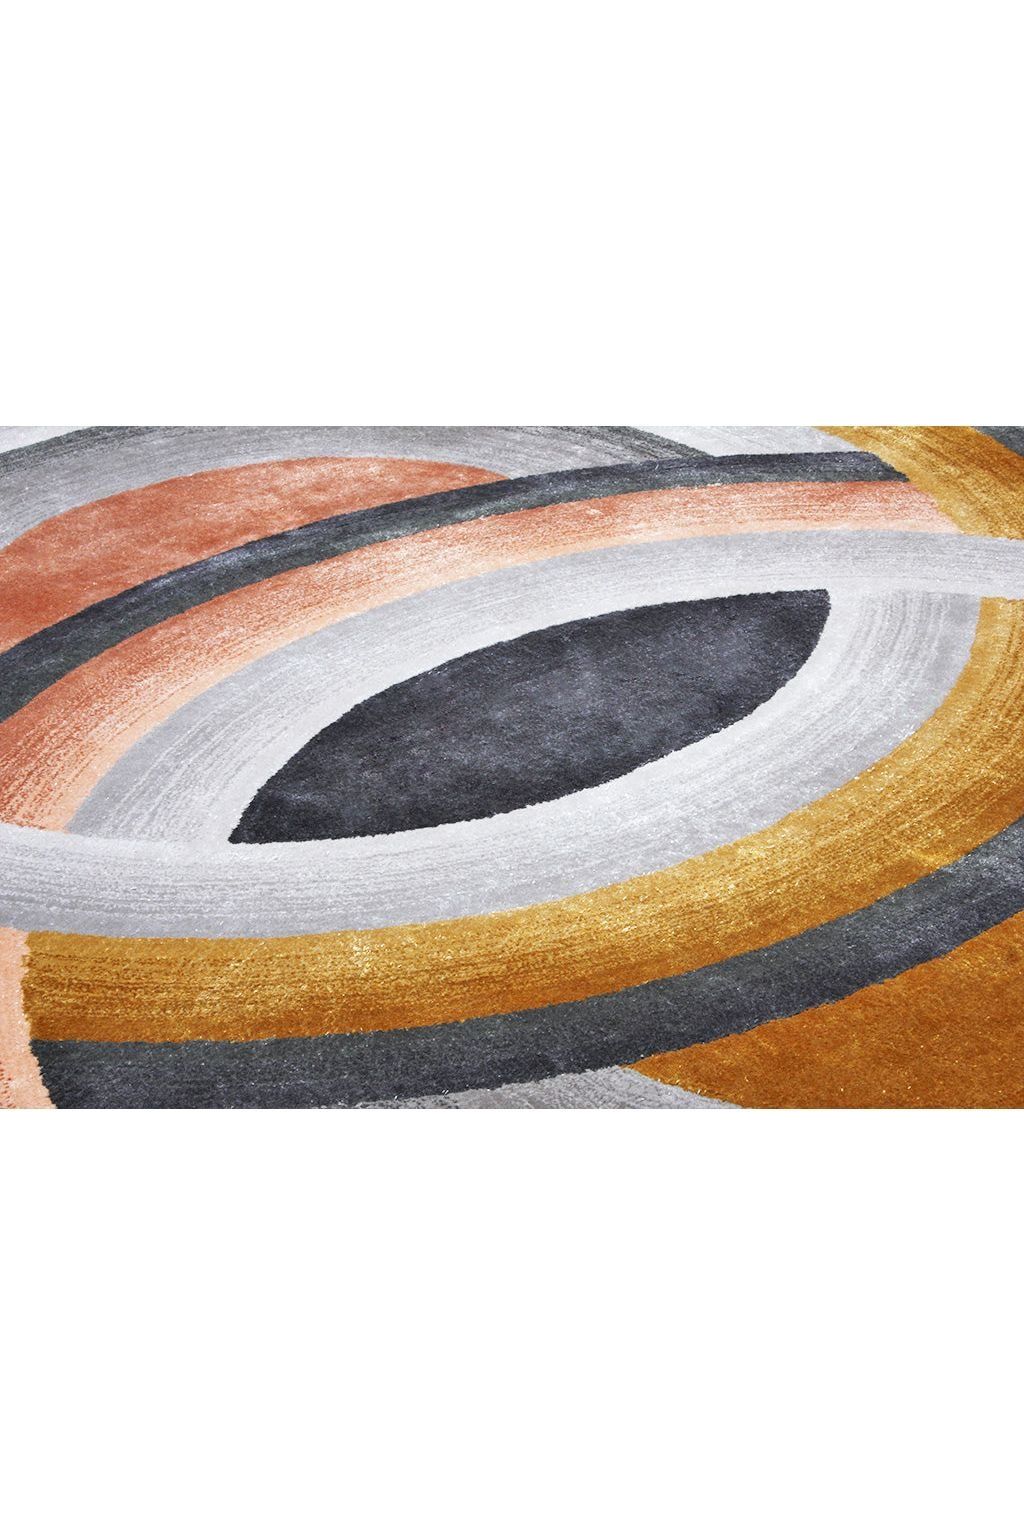 #Turkish_Carpets_Rugs# #Modern_Carpets# #Abrash_Carpets#Circle 002-U